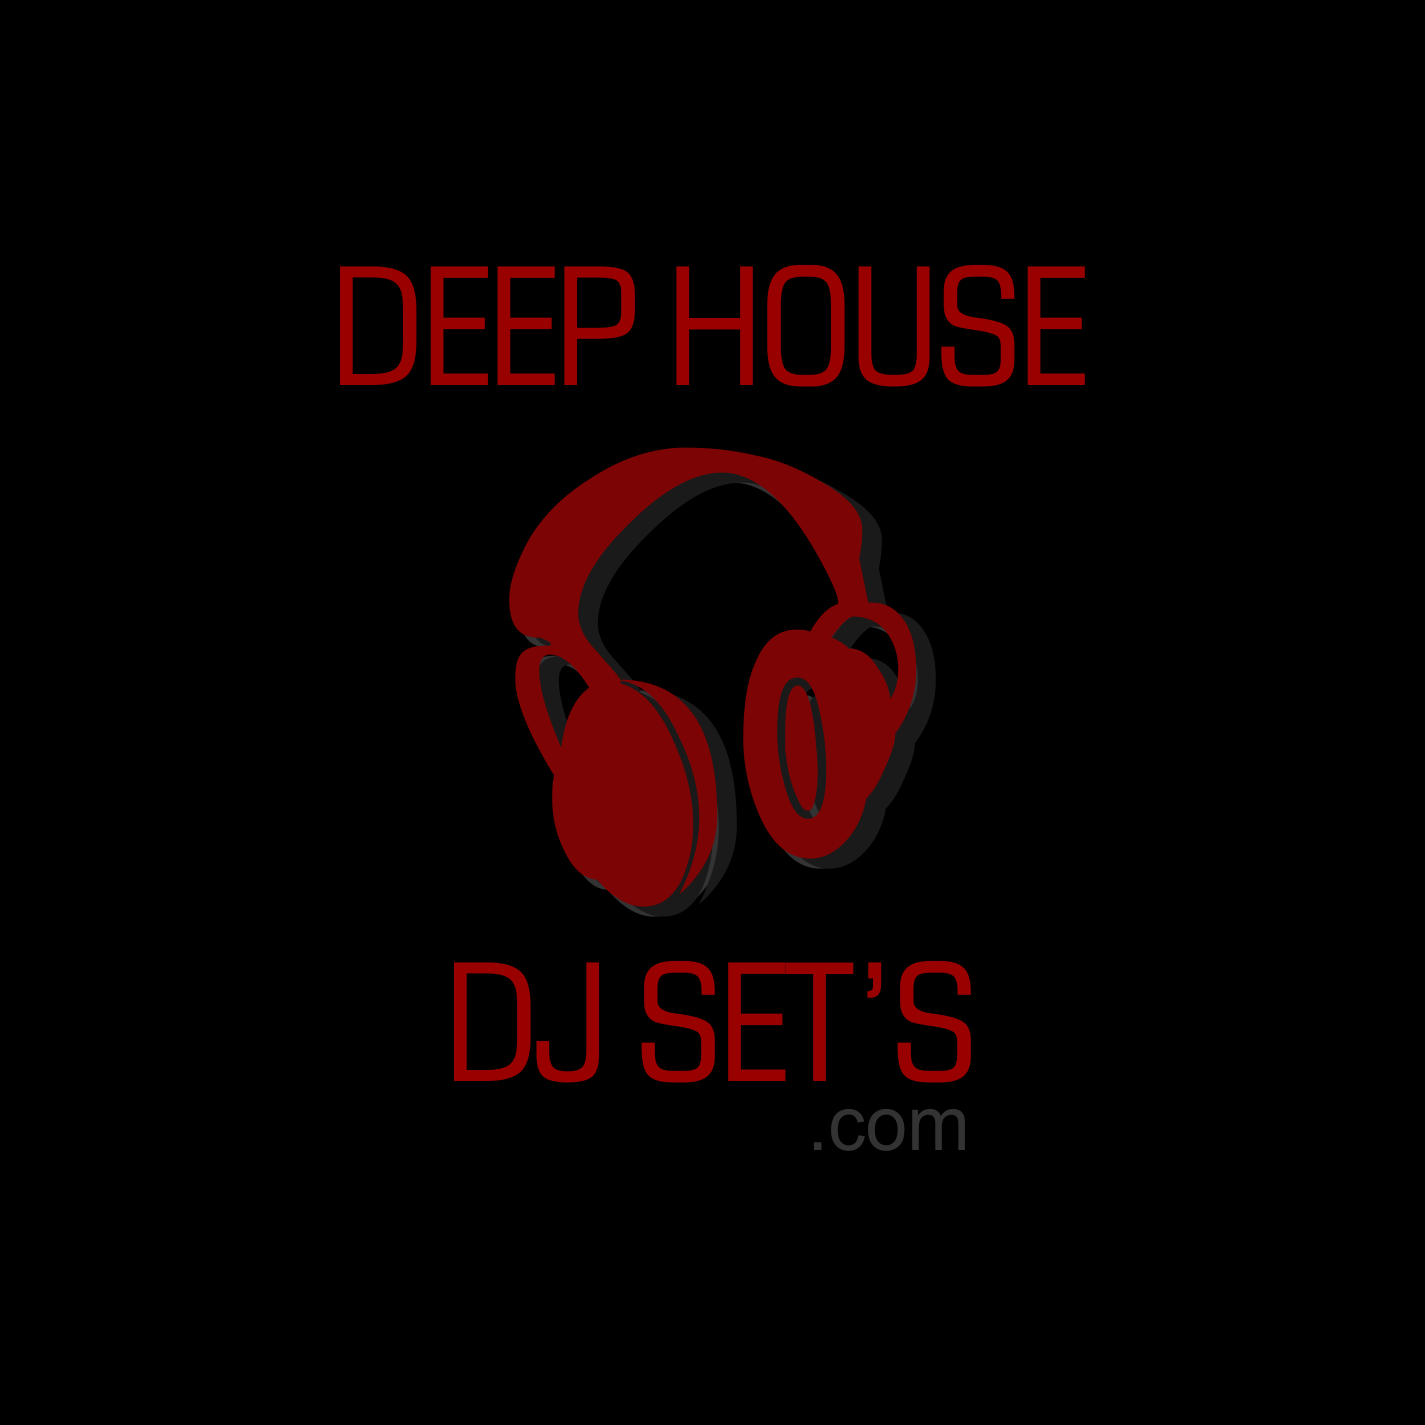 DEEP HOUSE DJ SET'S